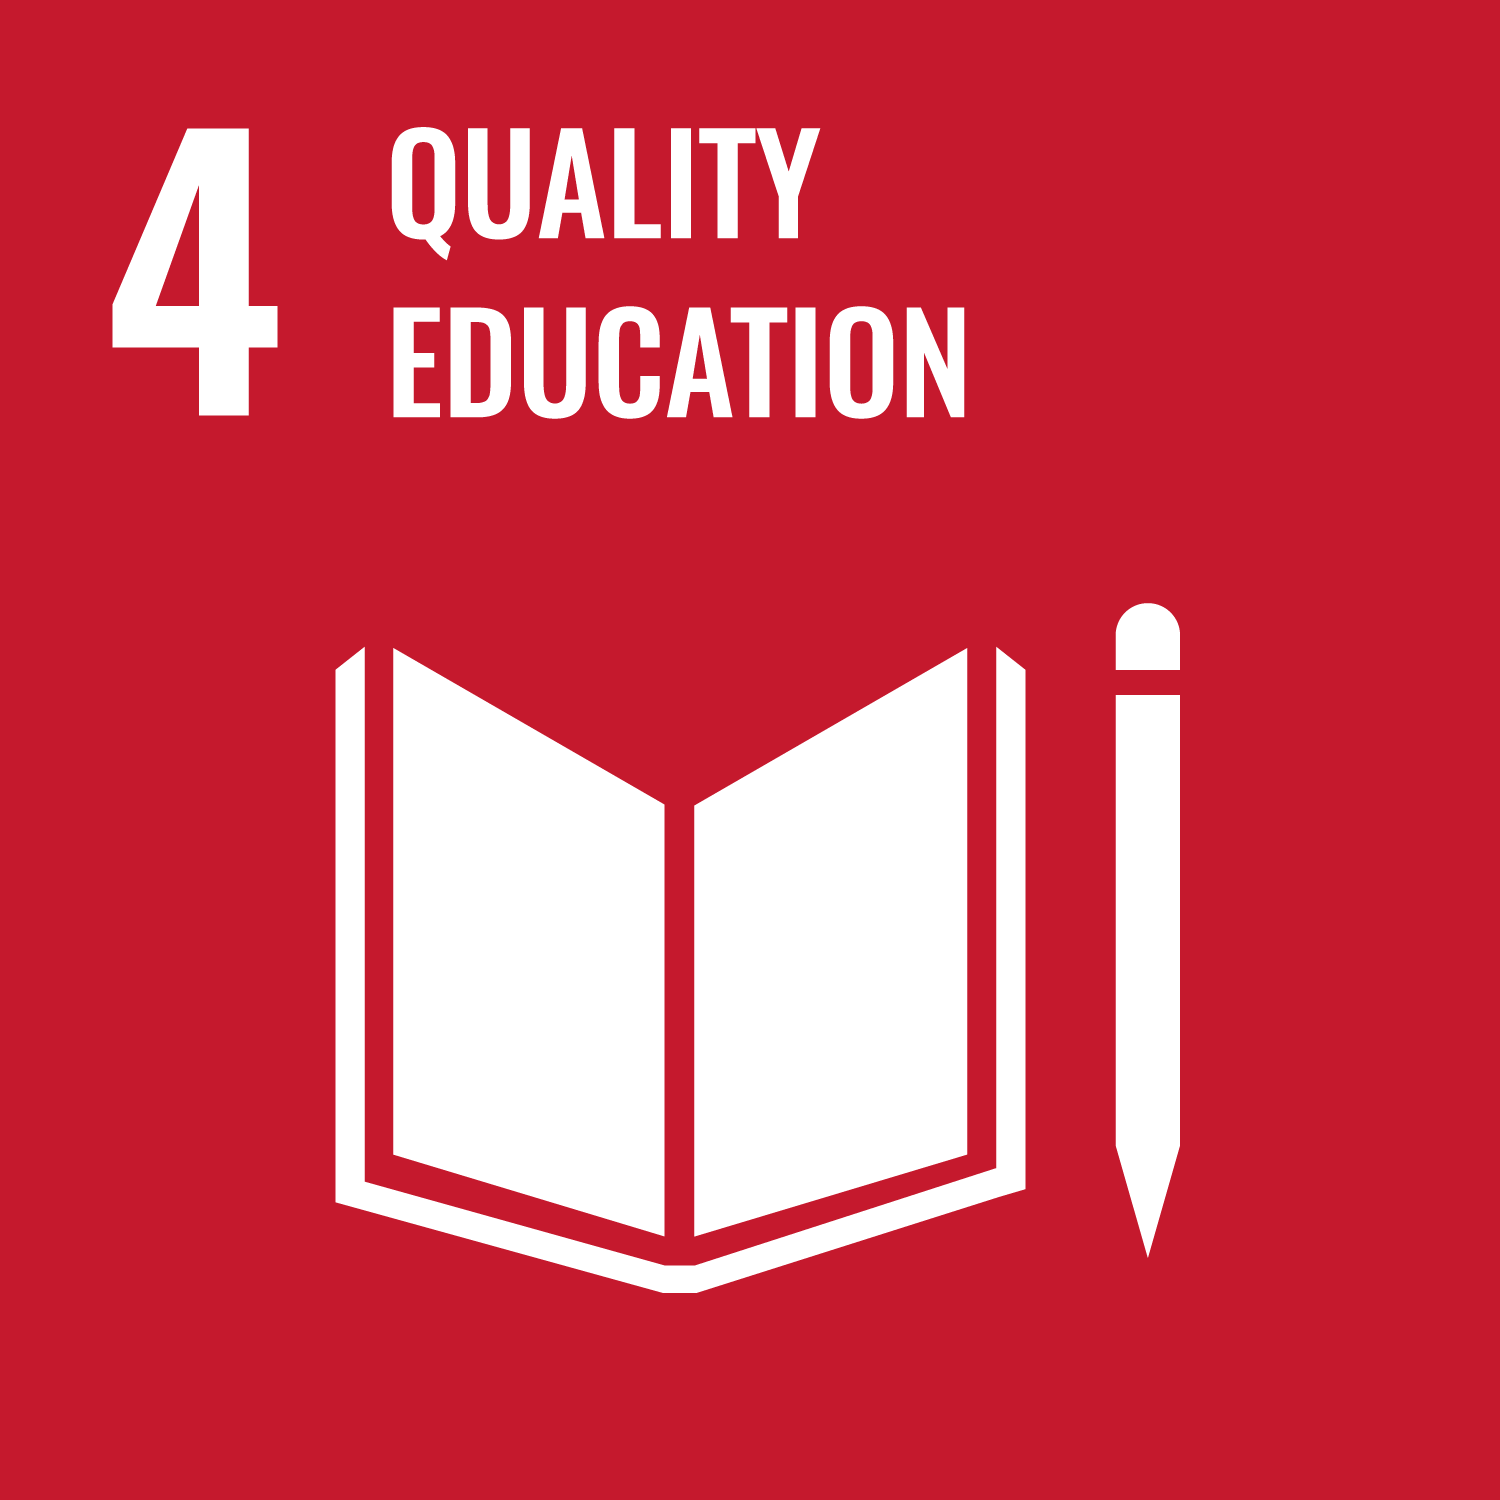 UN sustainable development goal 4 quality education